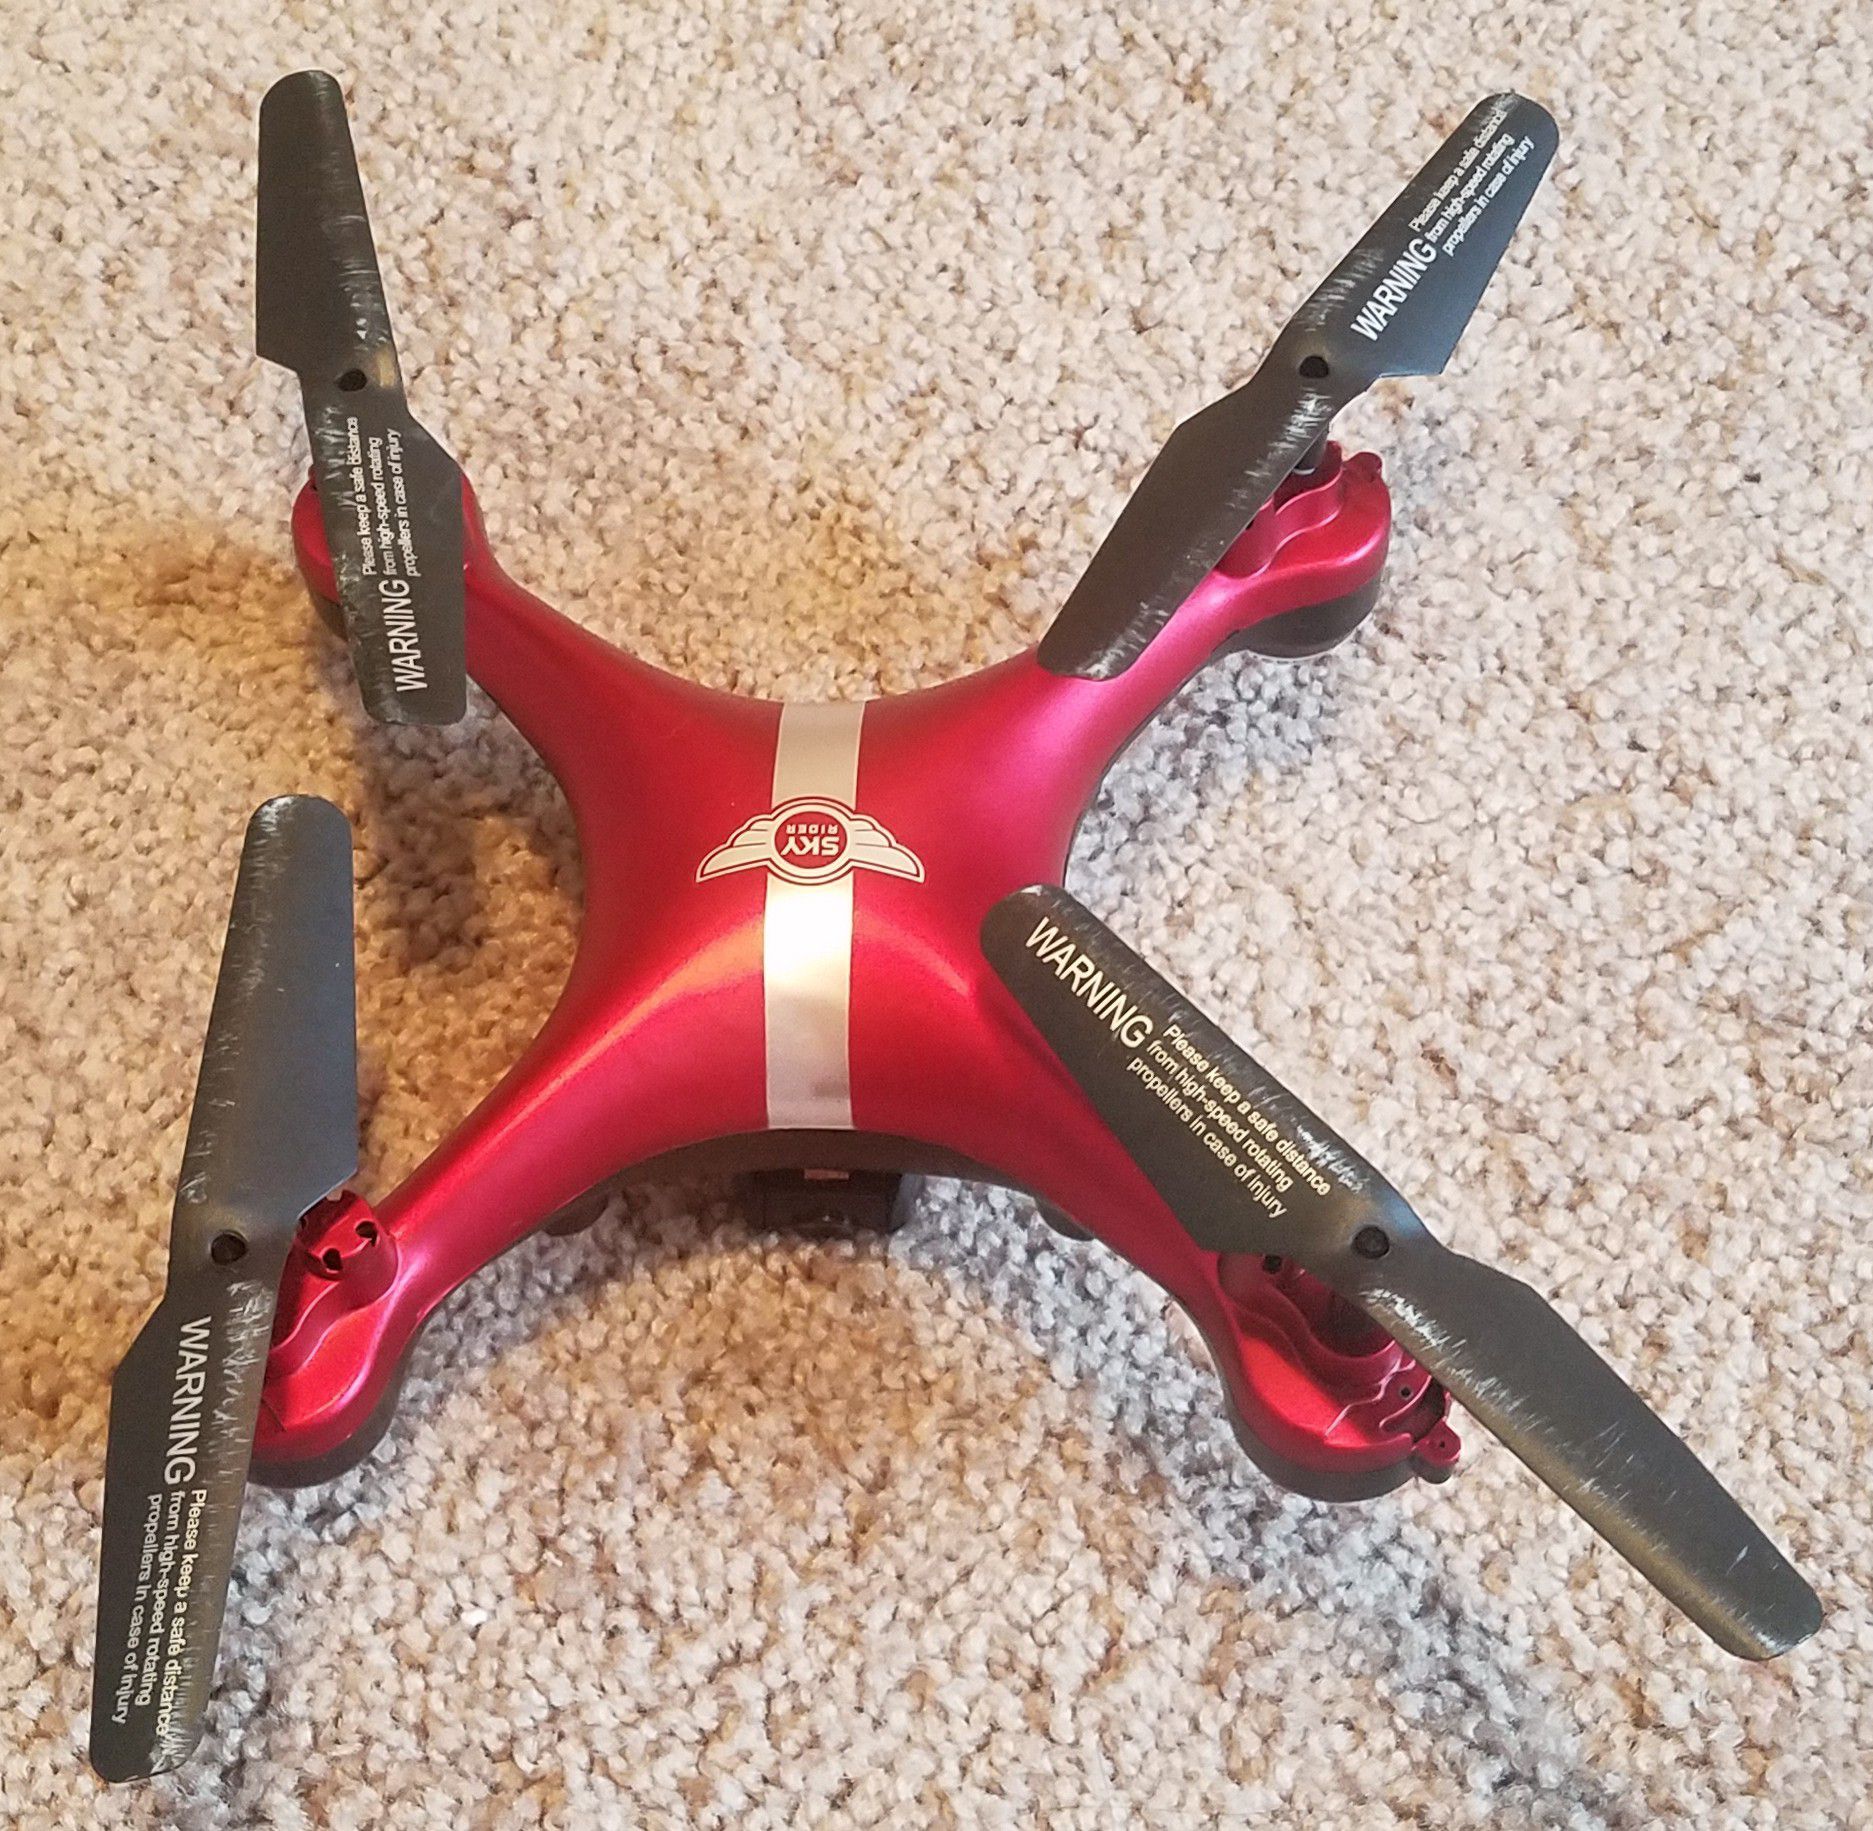 Eagle 3 drone